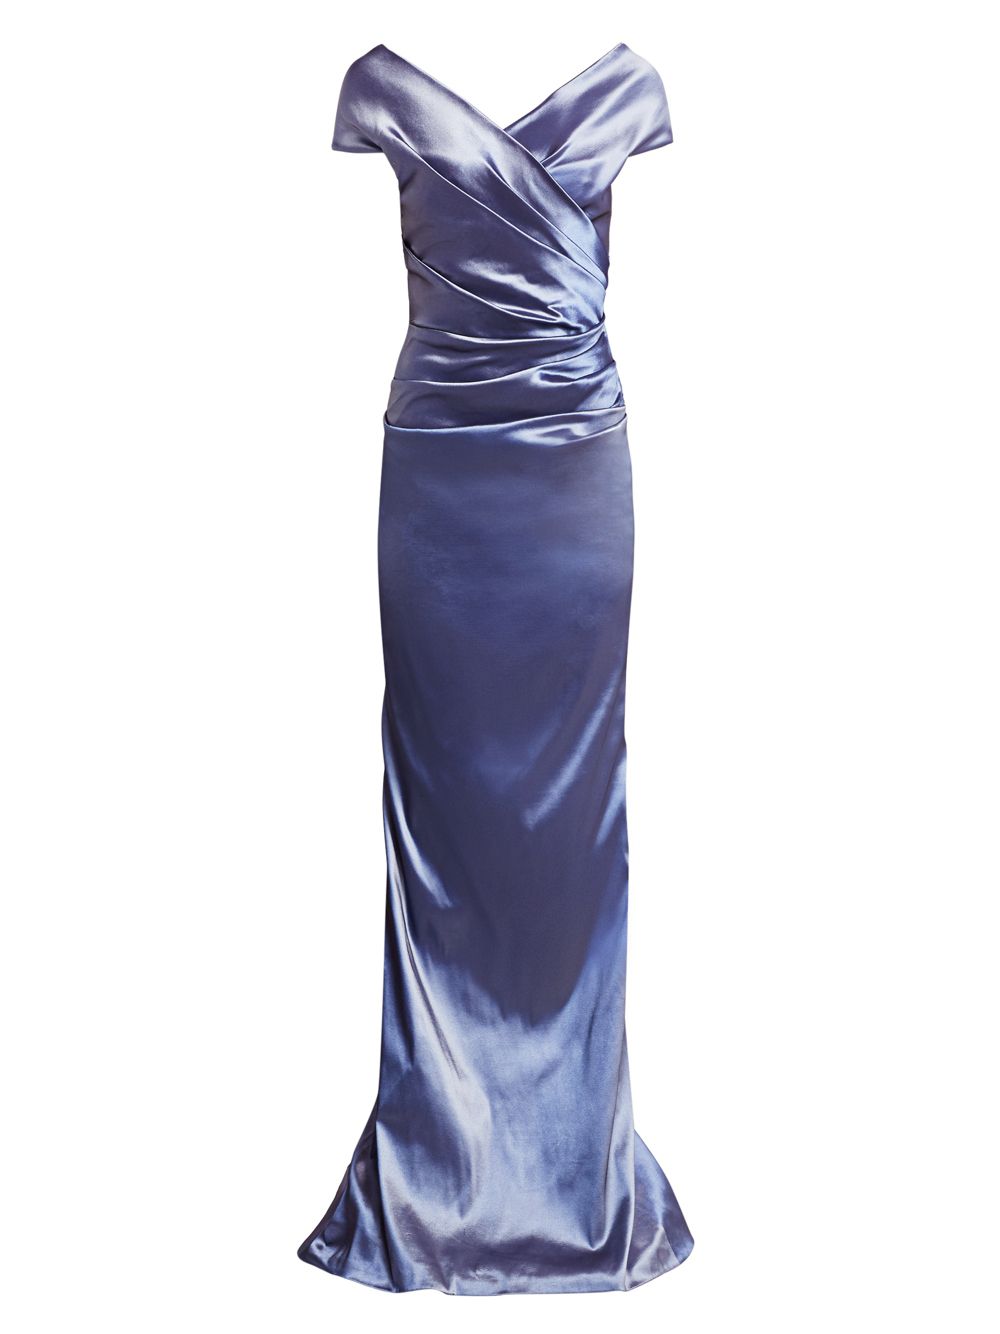 Платье из тафты Teri Jon by Rickie Freeman платье рубашка миди из тафты с пайетками и объемными рукавами teri jon by rickie freeman черный